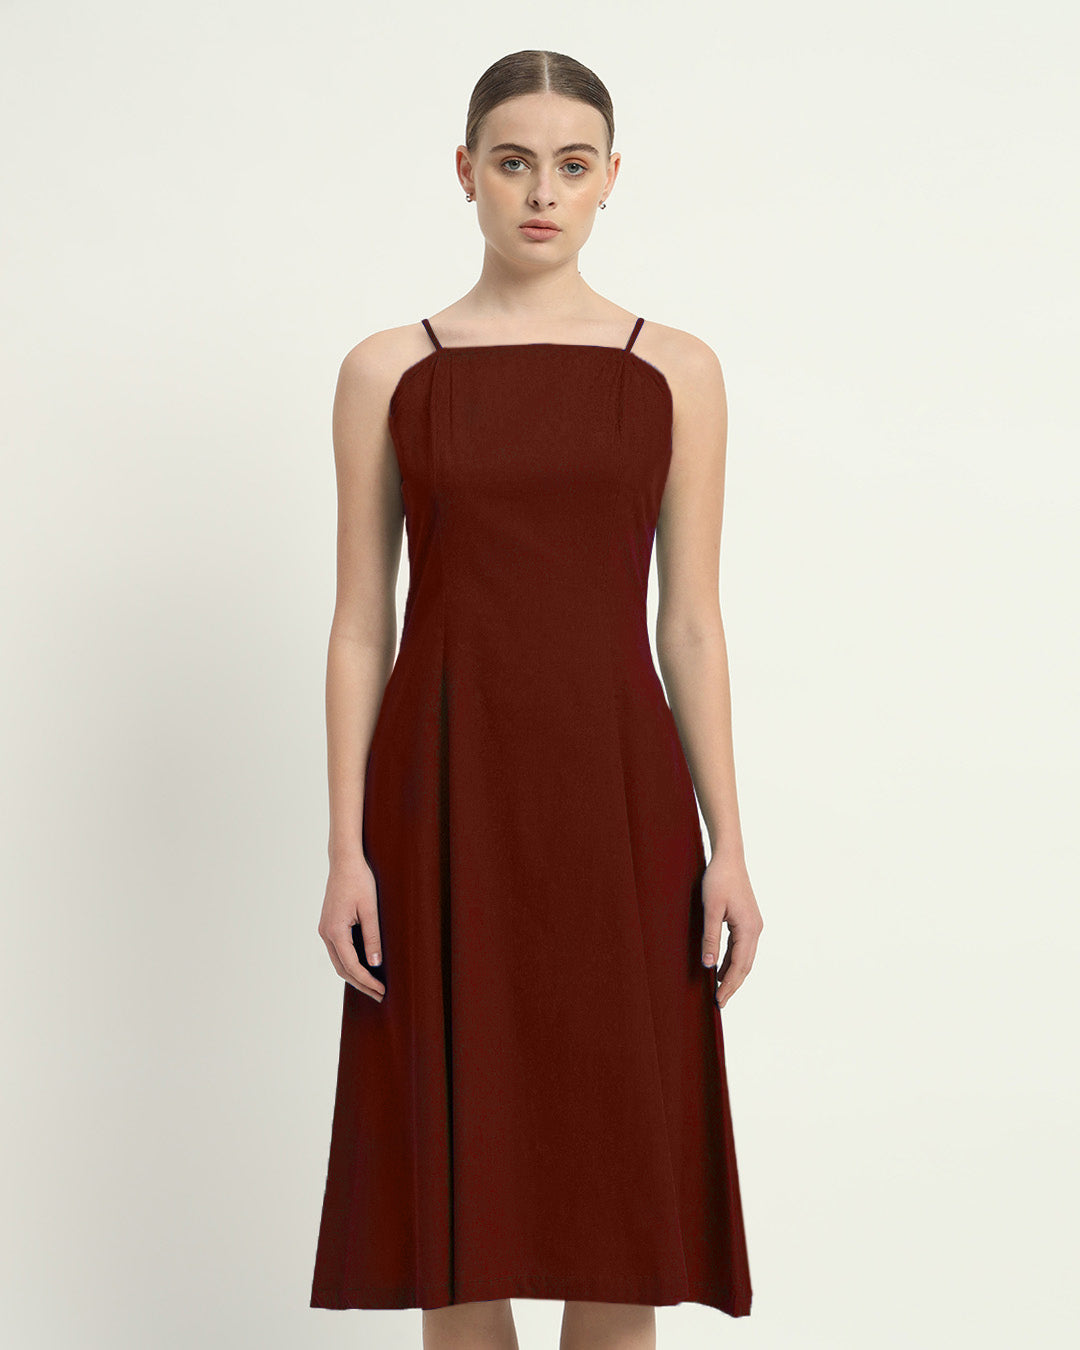 The Rouge Valatie Cotton Dress